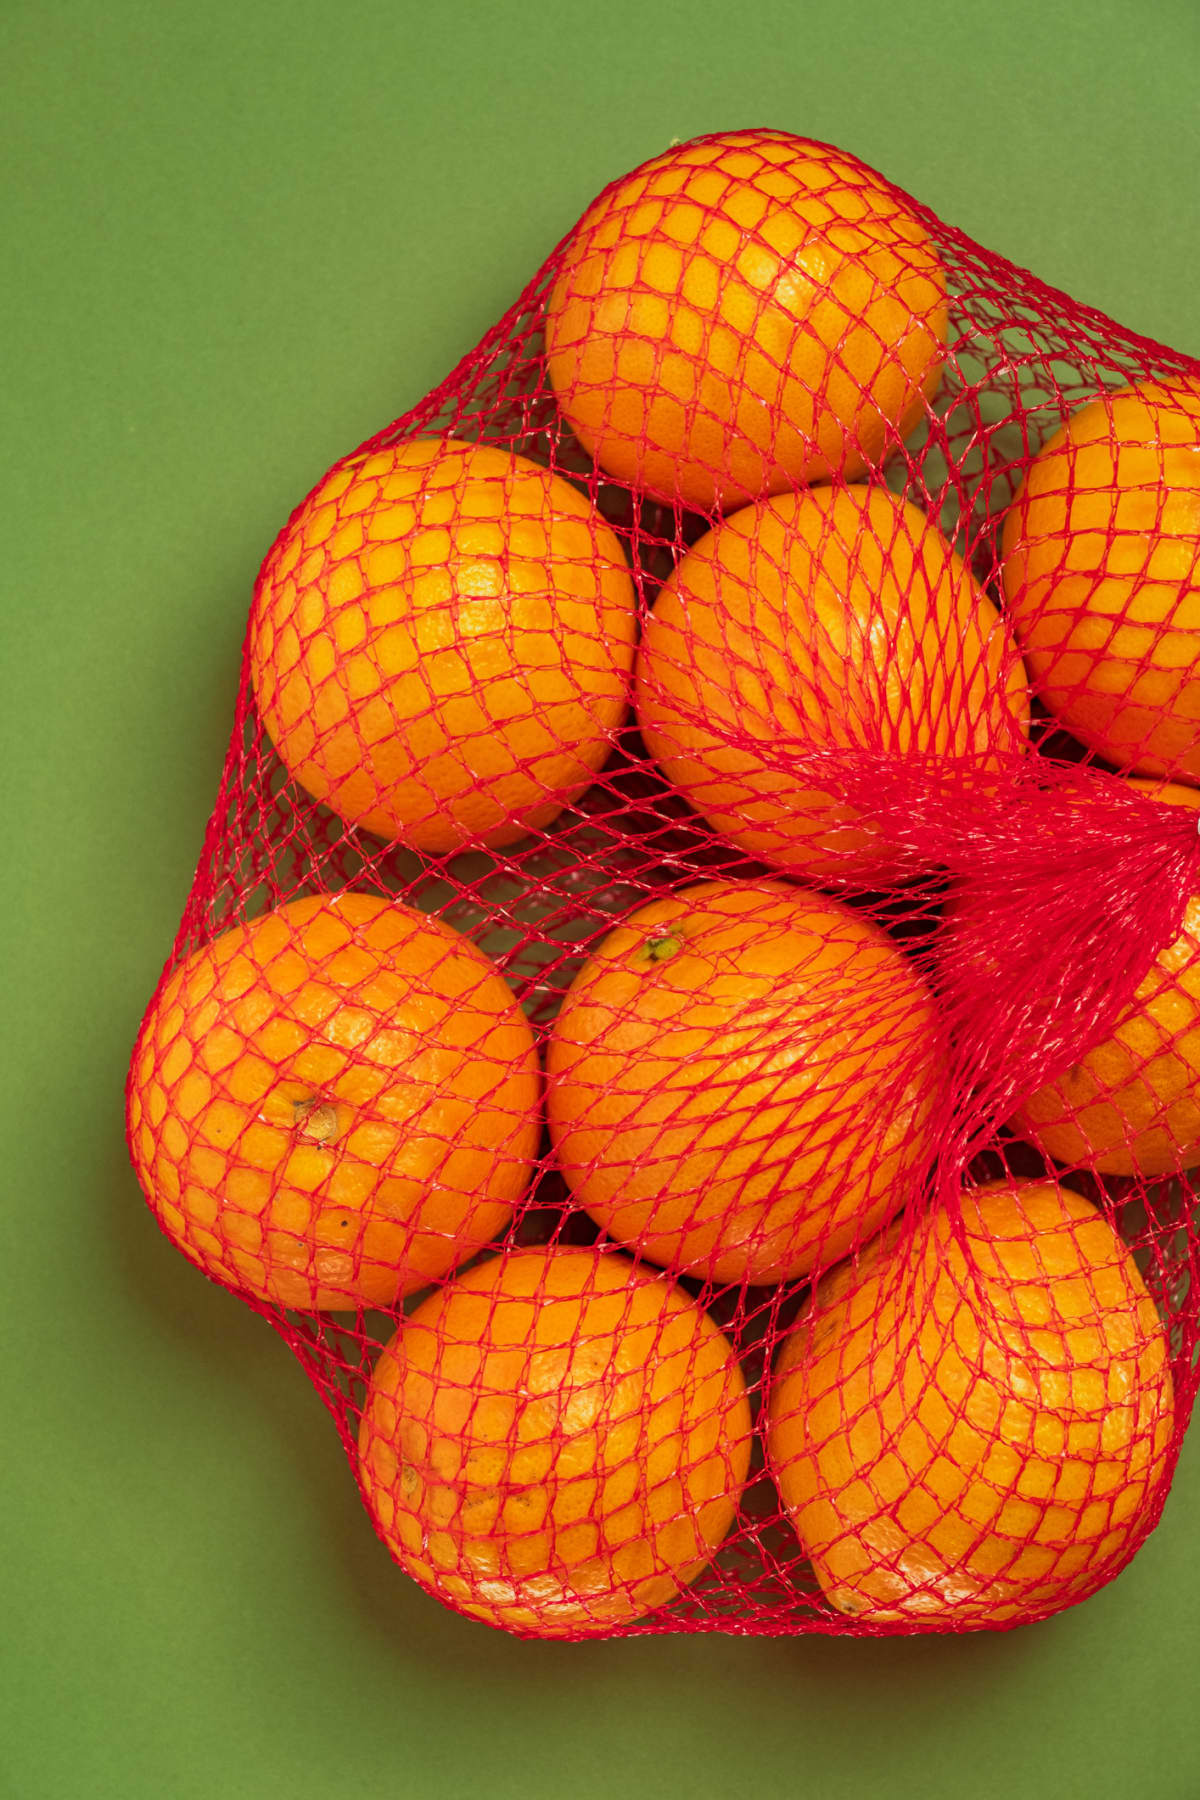 Oranges in red mesh bag